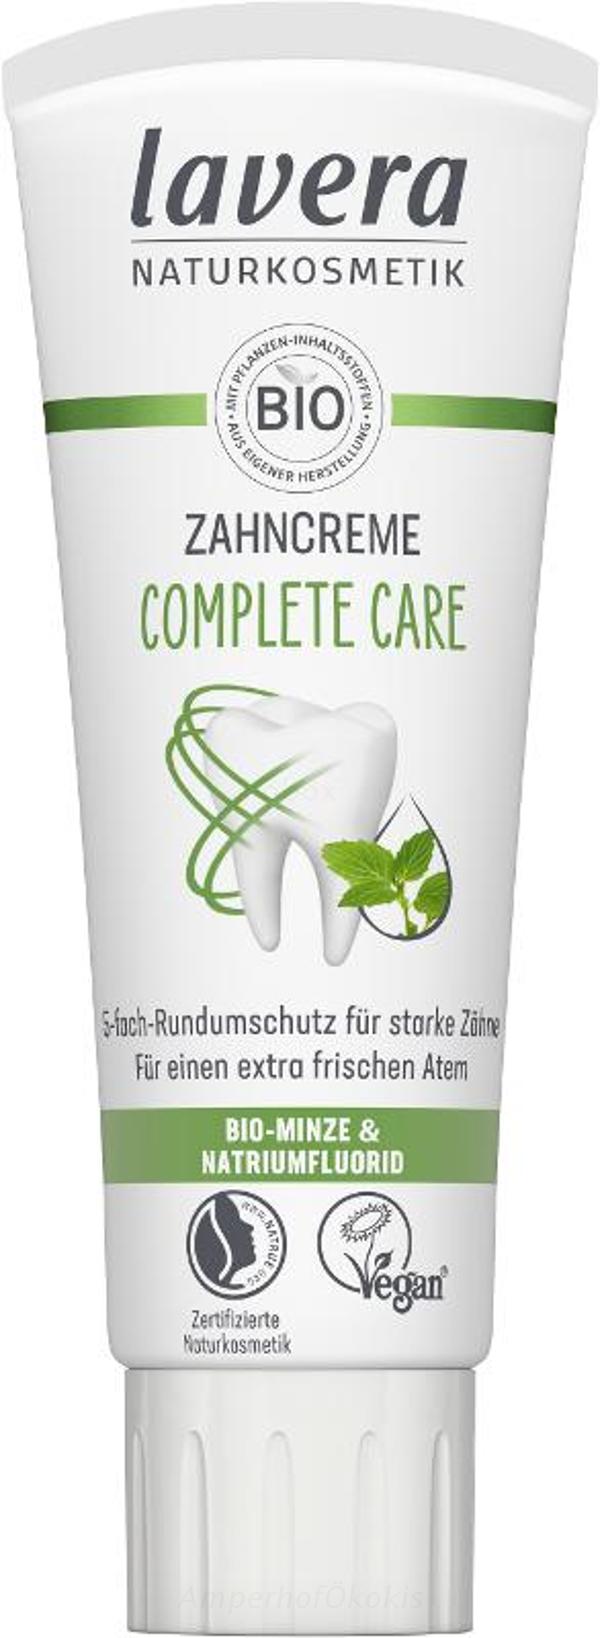 Produktfoto zu Zahncreme Complete Care 75 ml